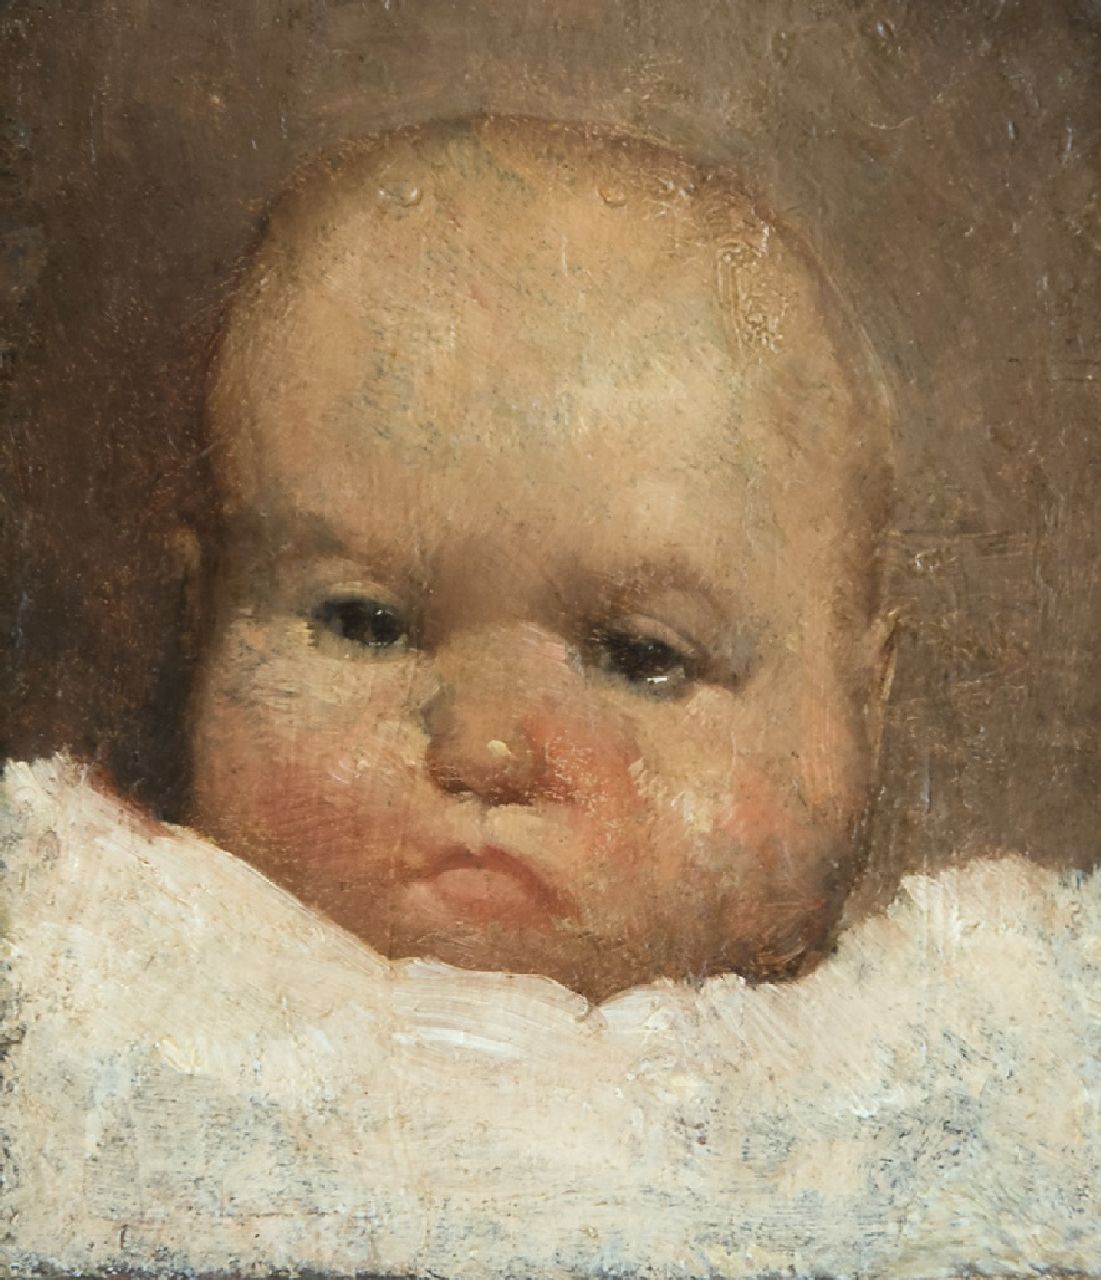 Berg W.H. van den | 'Willem' Hendrik van den Berg | Paintings offered for sale | Portrait of a baby, oil on panel 10.3 x 9.2 cm